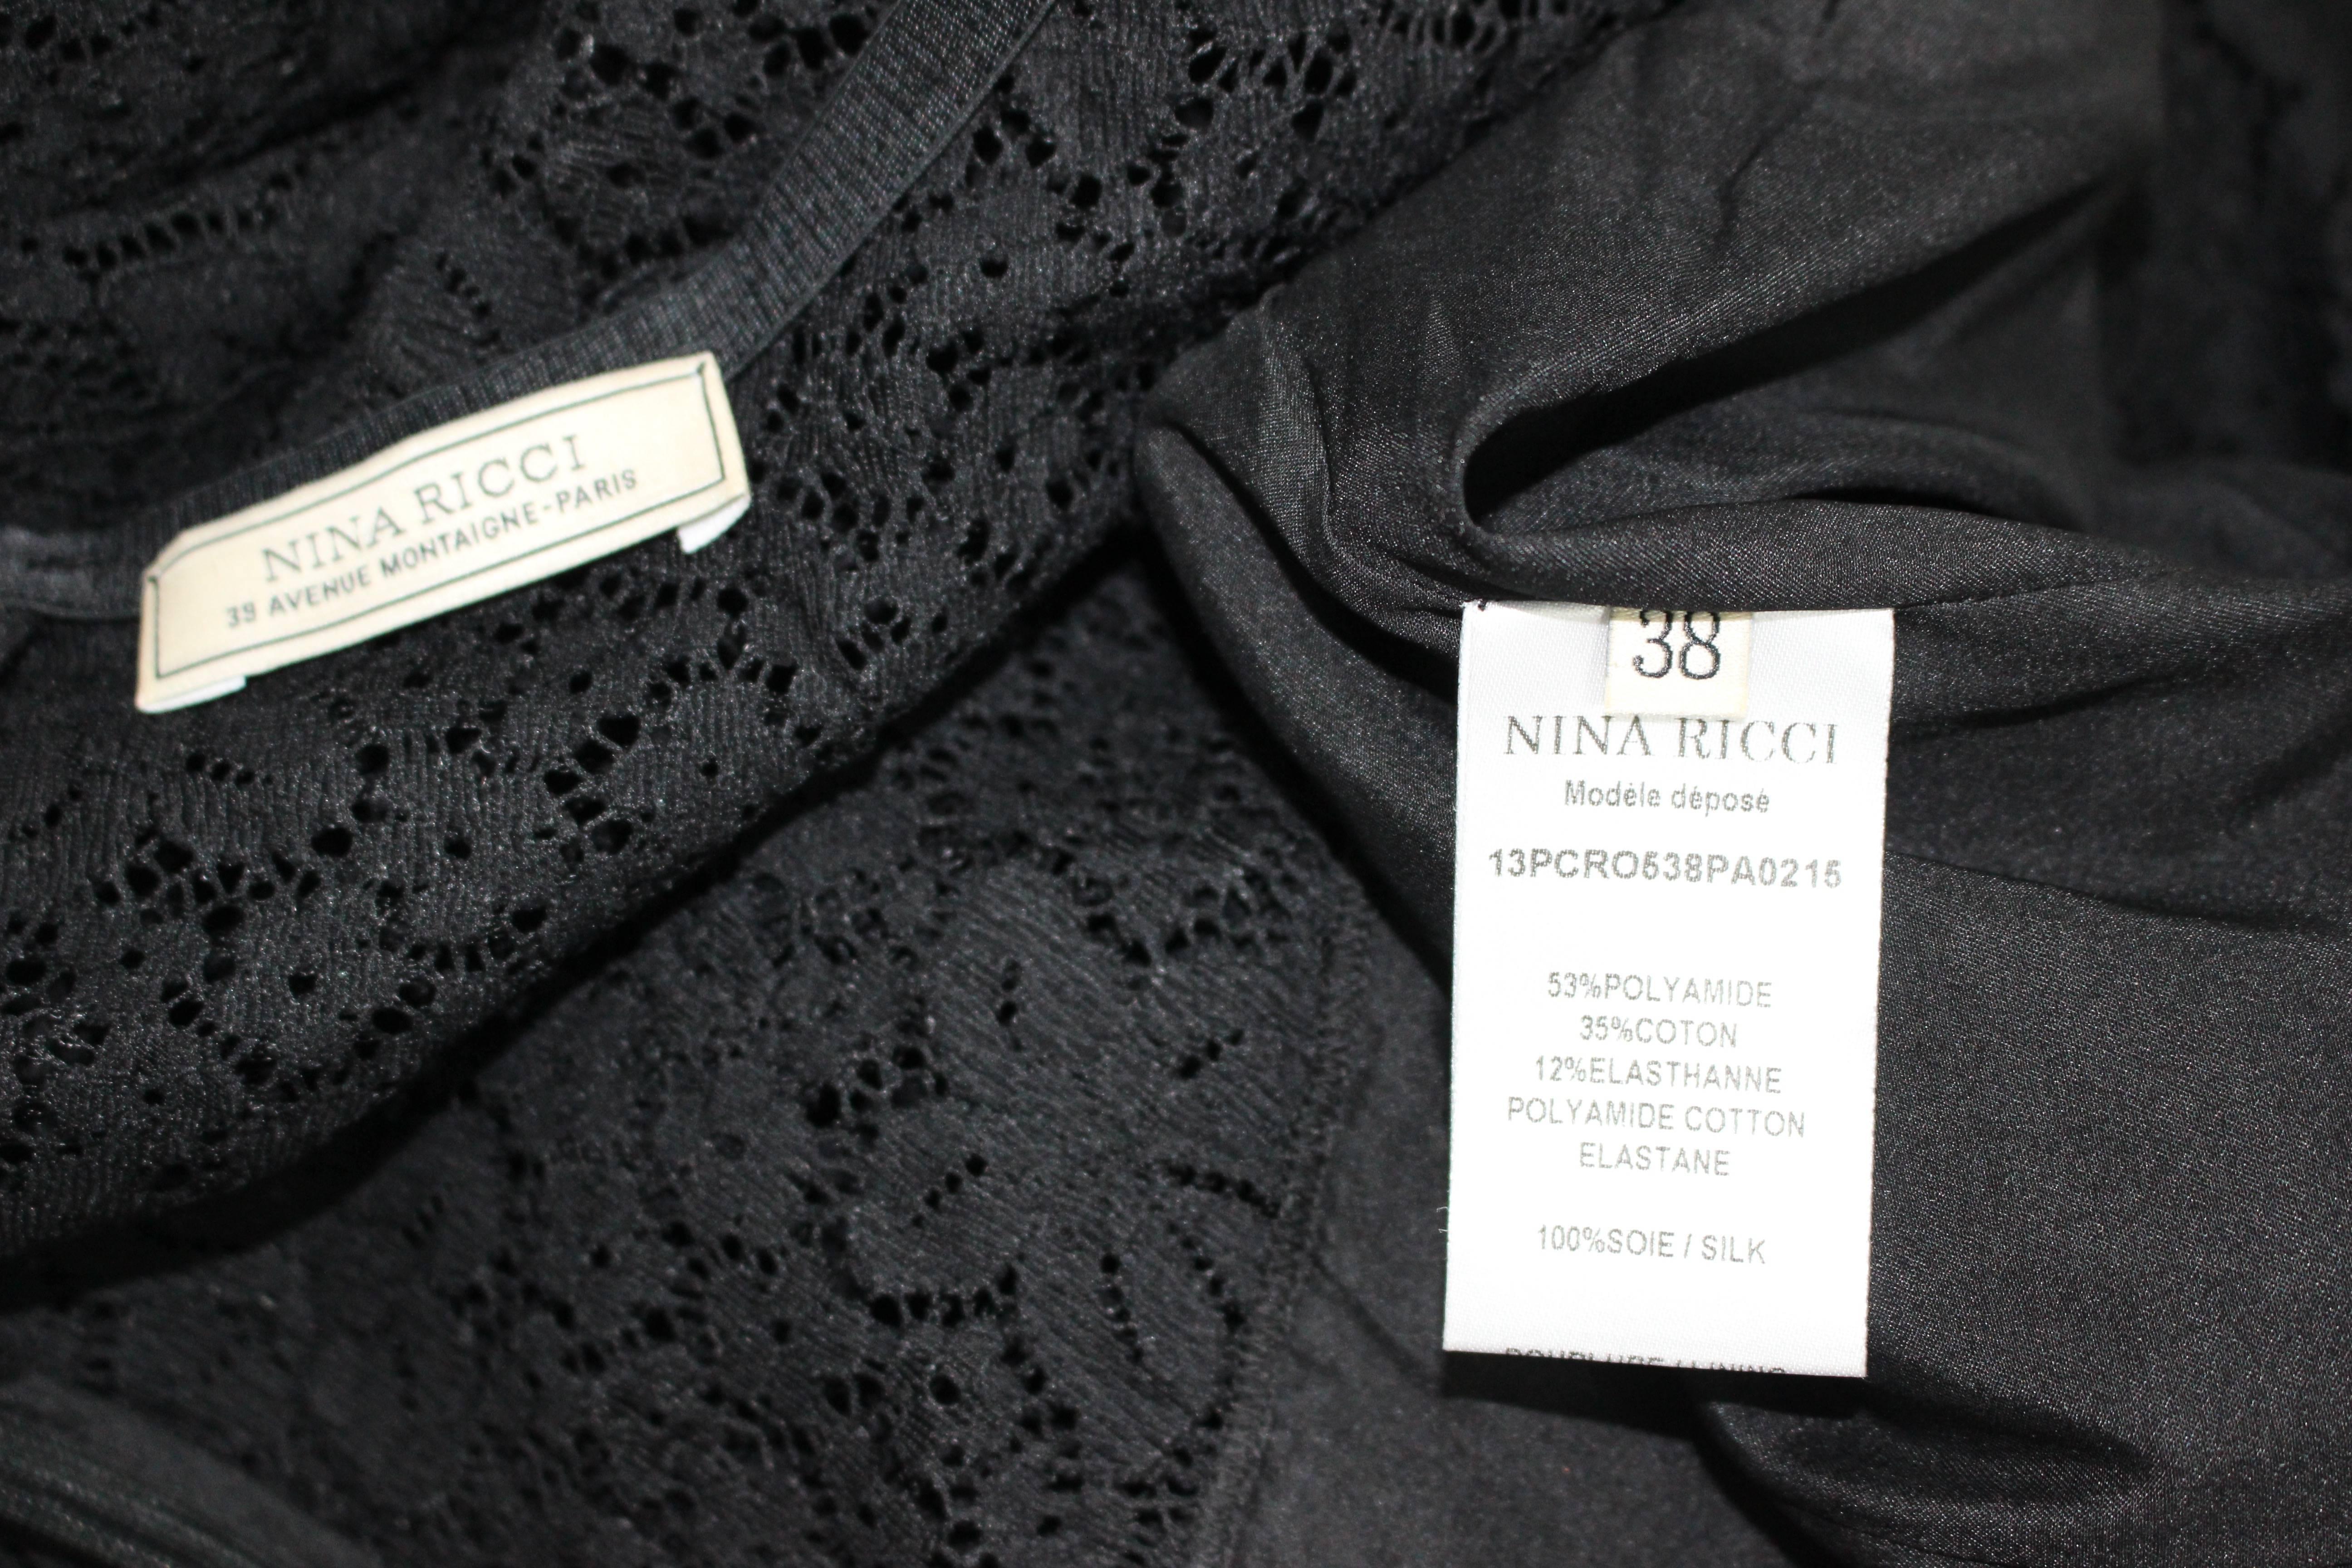 Nina Ricci Black Lace Ruffles Fishtail Evening Gown, 2013   3